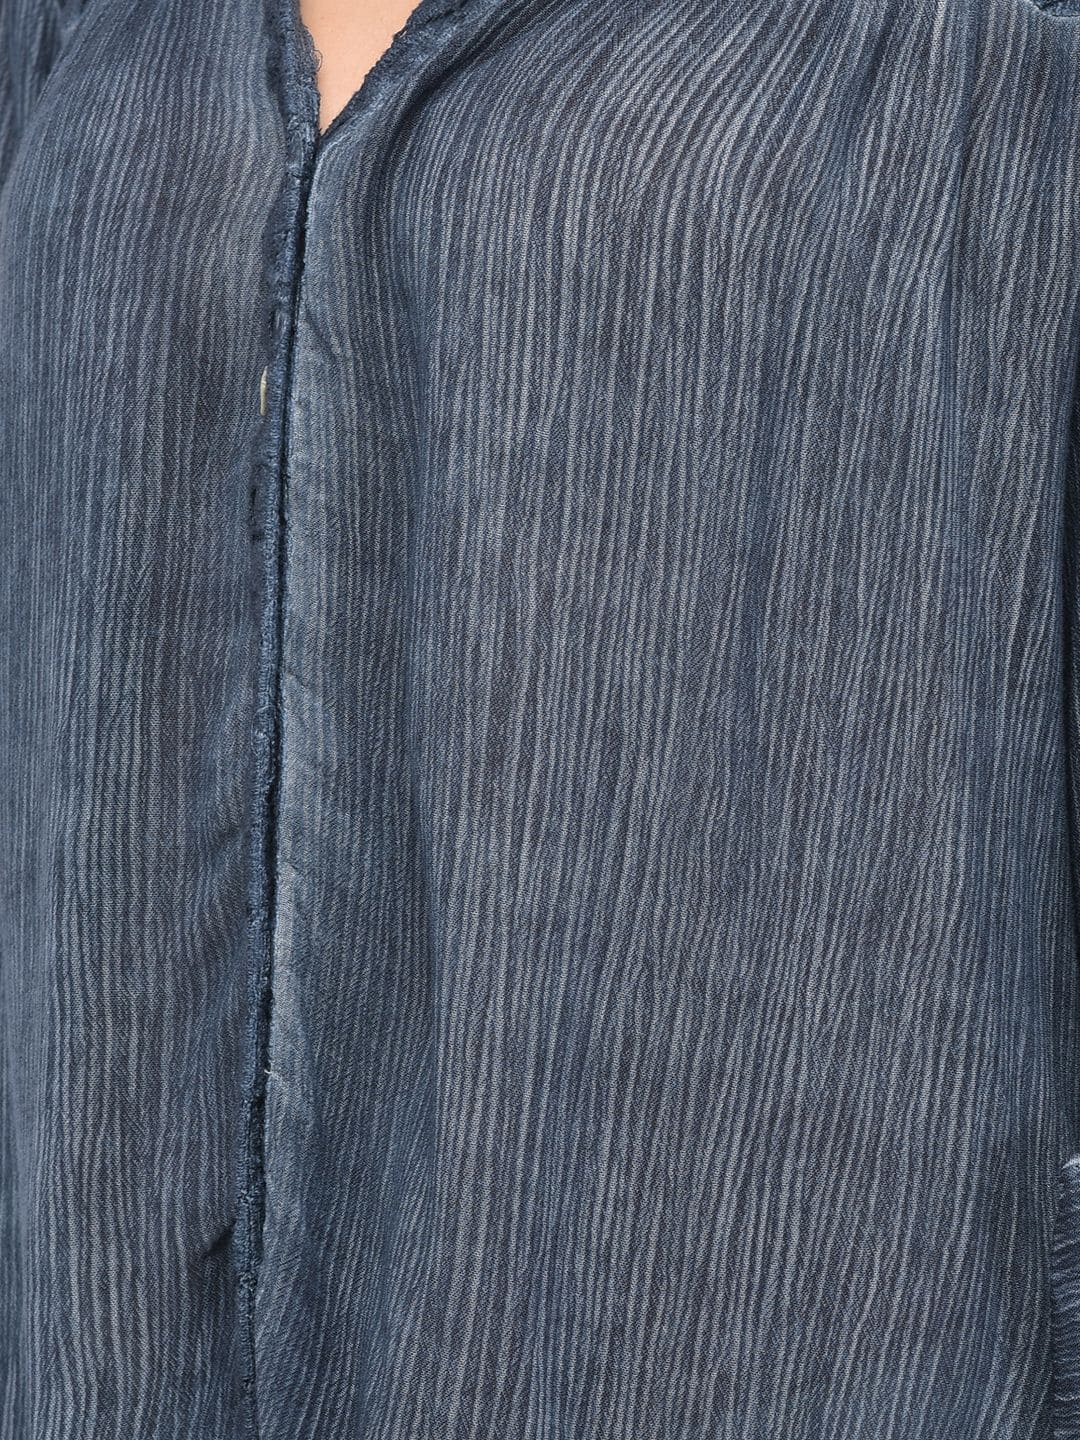 Women Net Patch Detail Navy Striped Front Tie Shirt